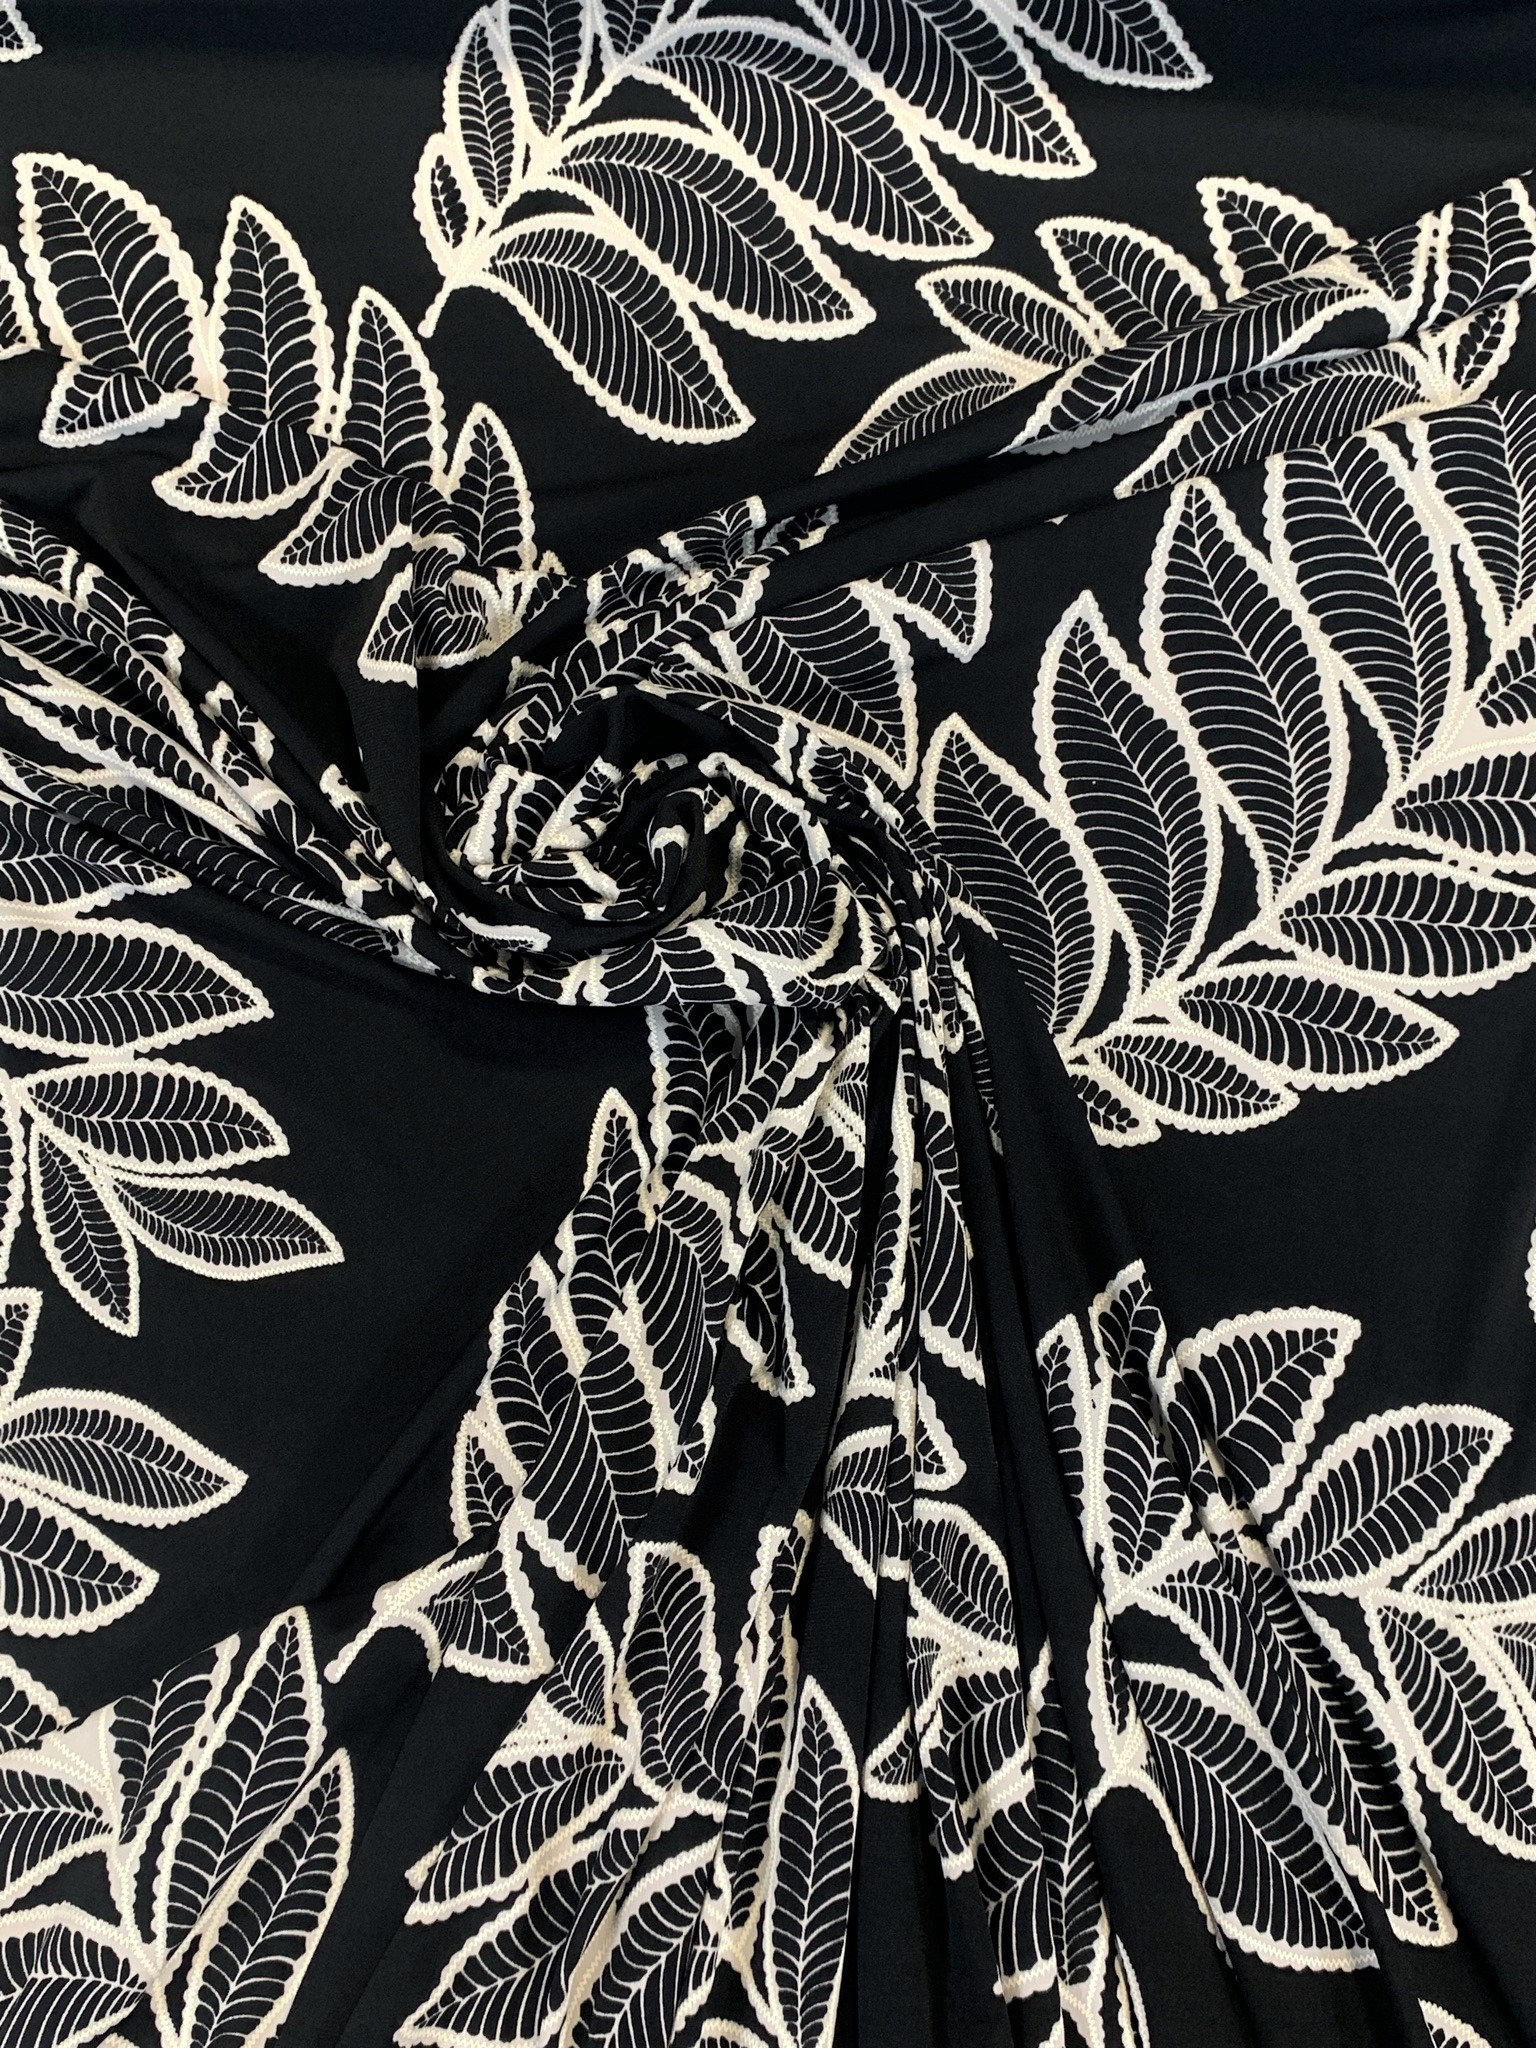 Black White Palm Leaves 2-way Stretch Fabric Shirt Apparel - Etsy